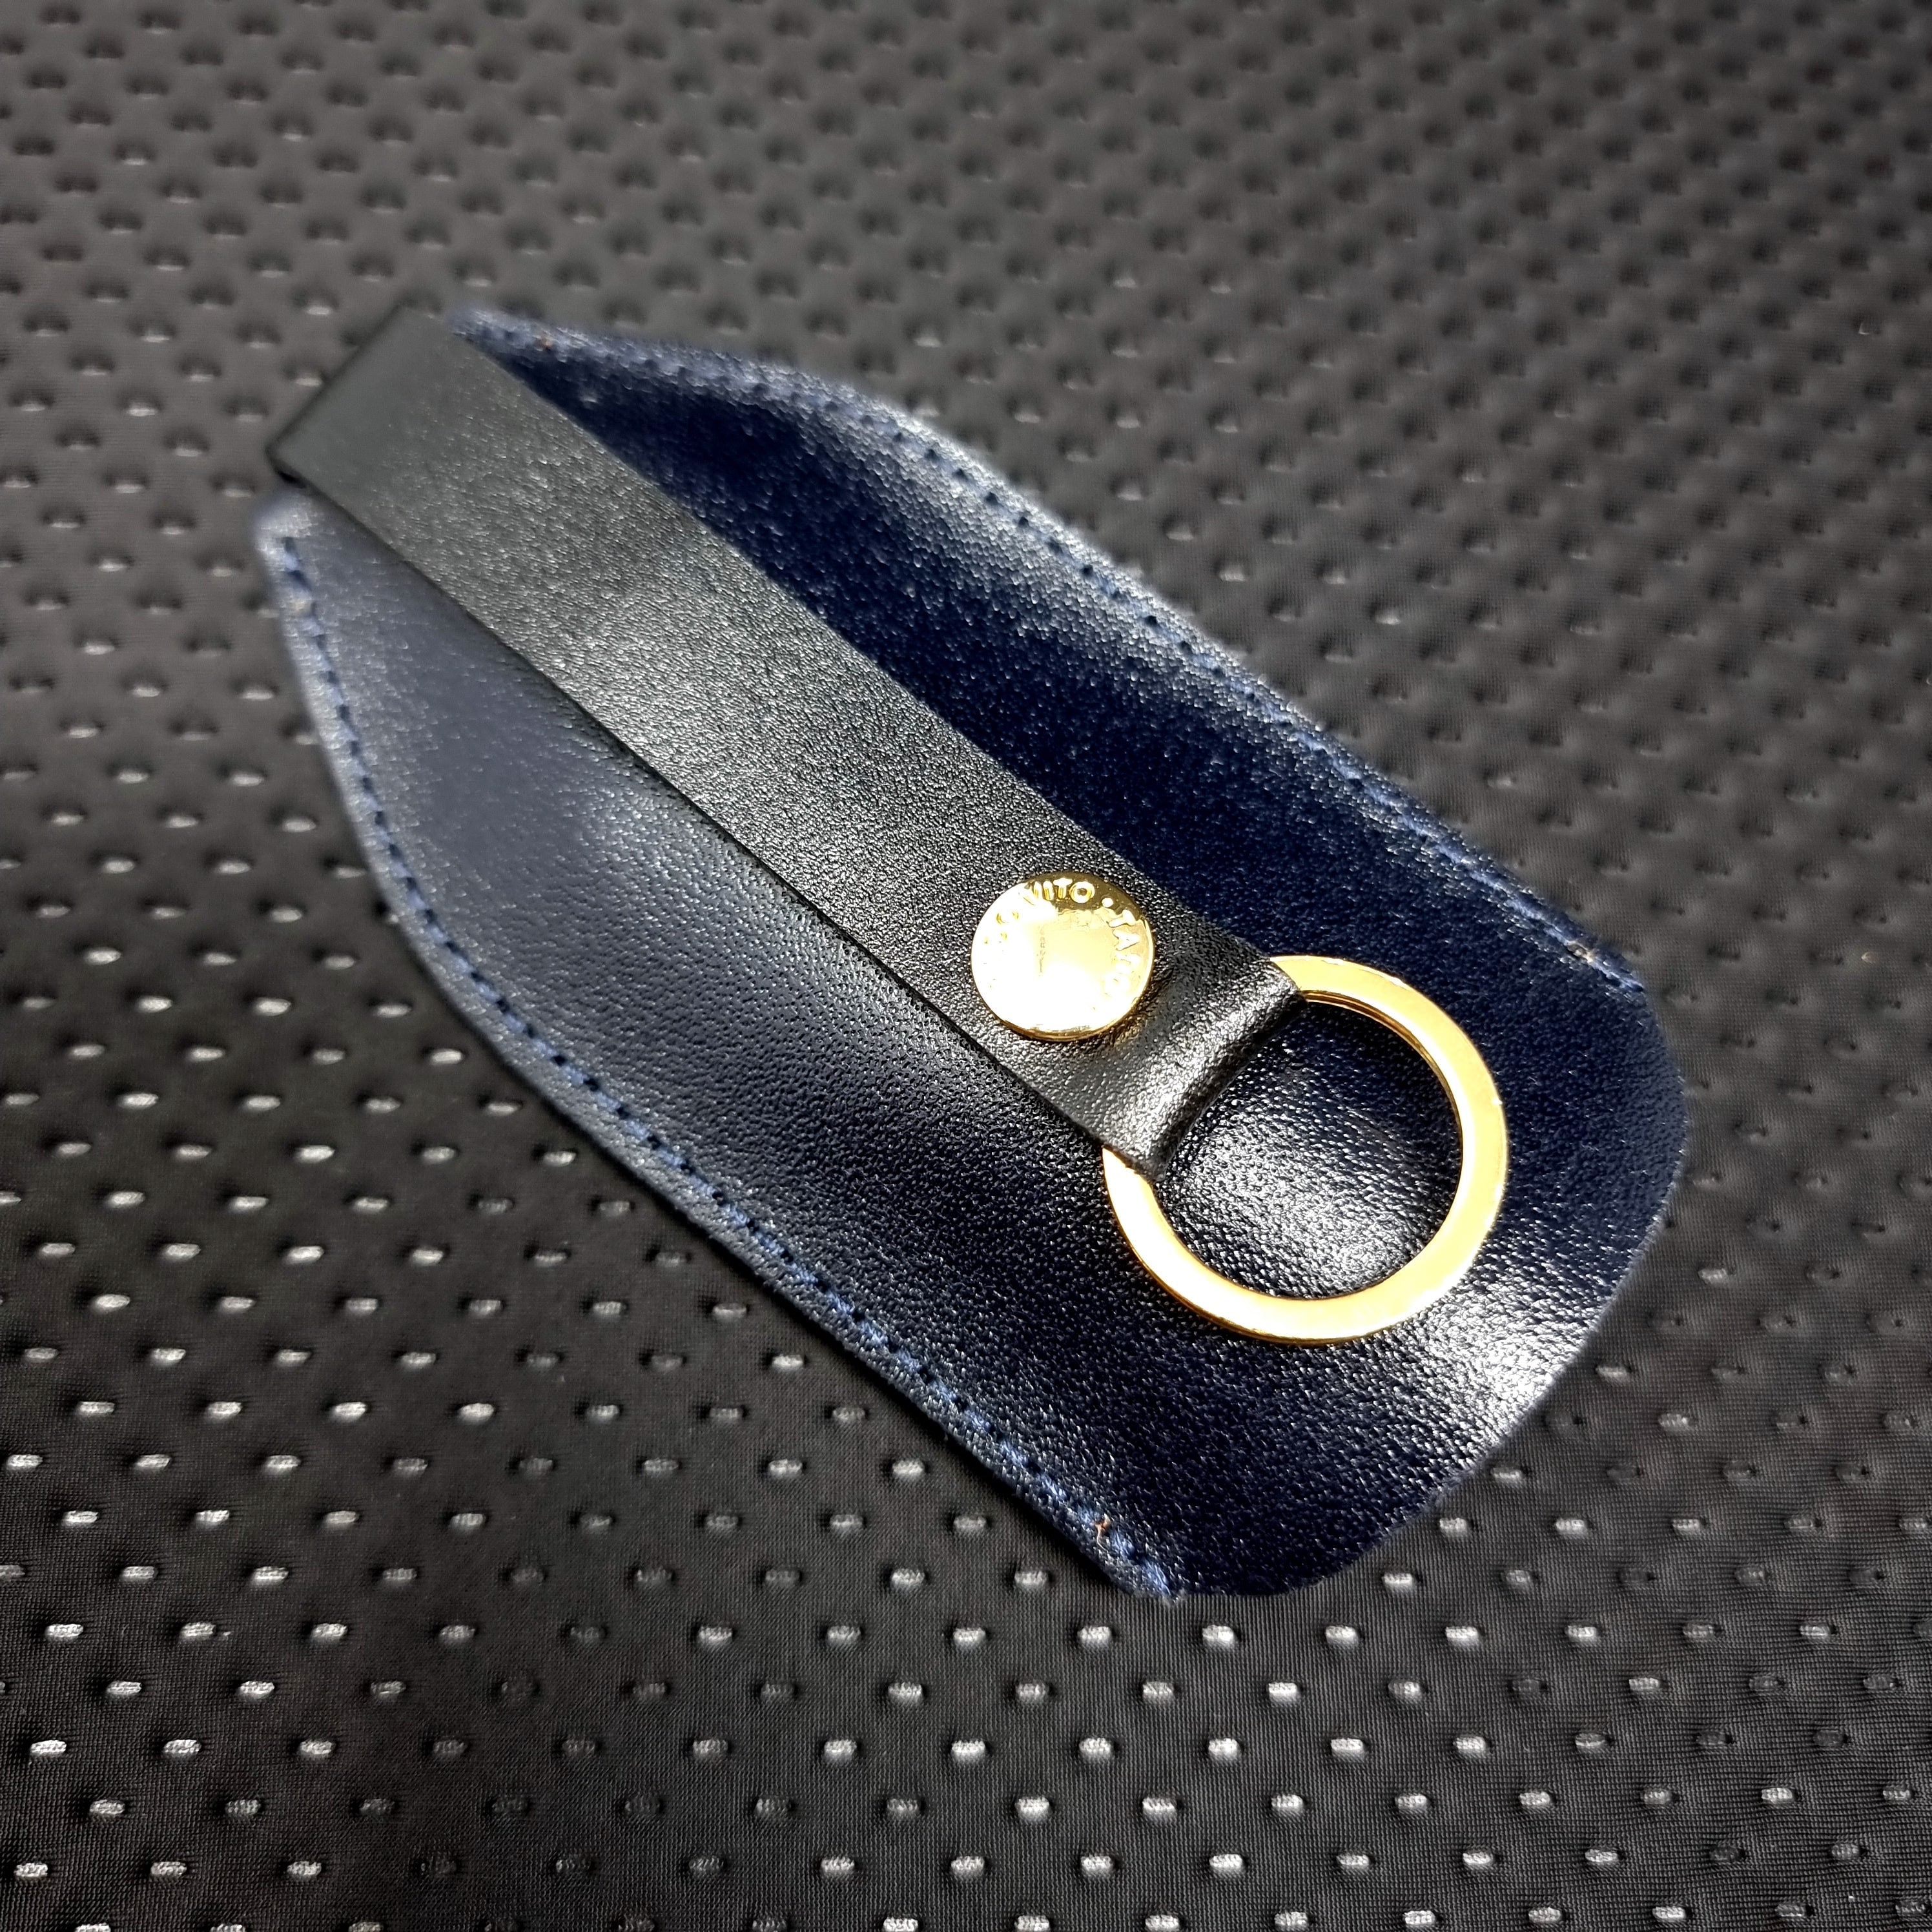 Black Leather Bell Key Holder - Black